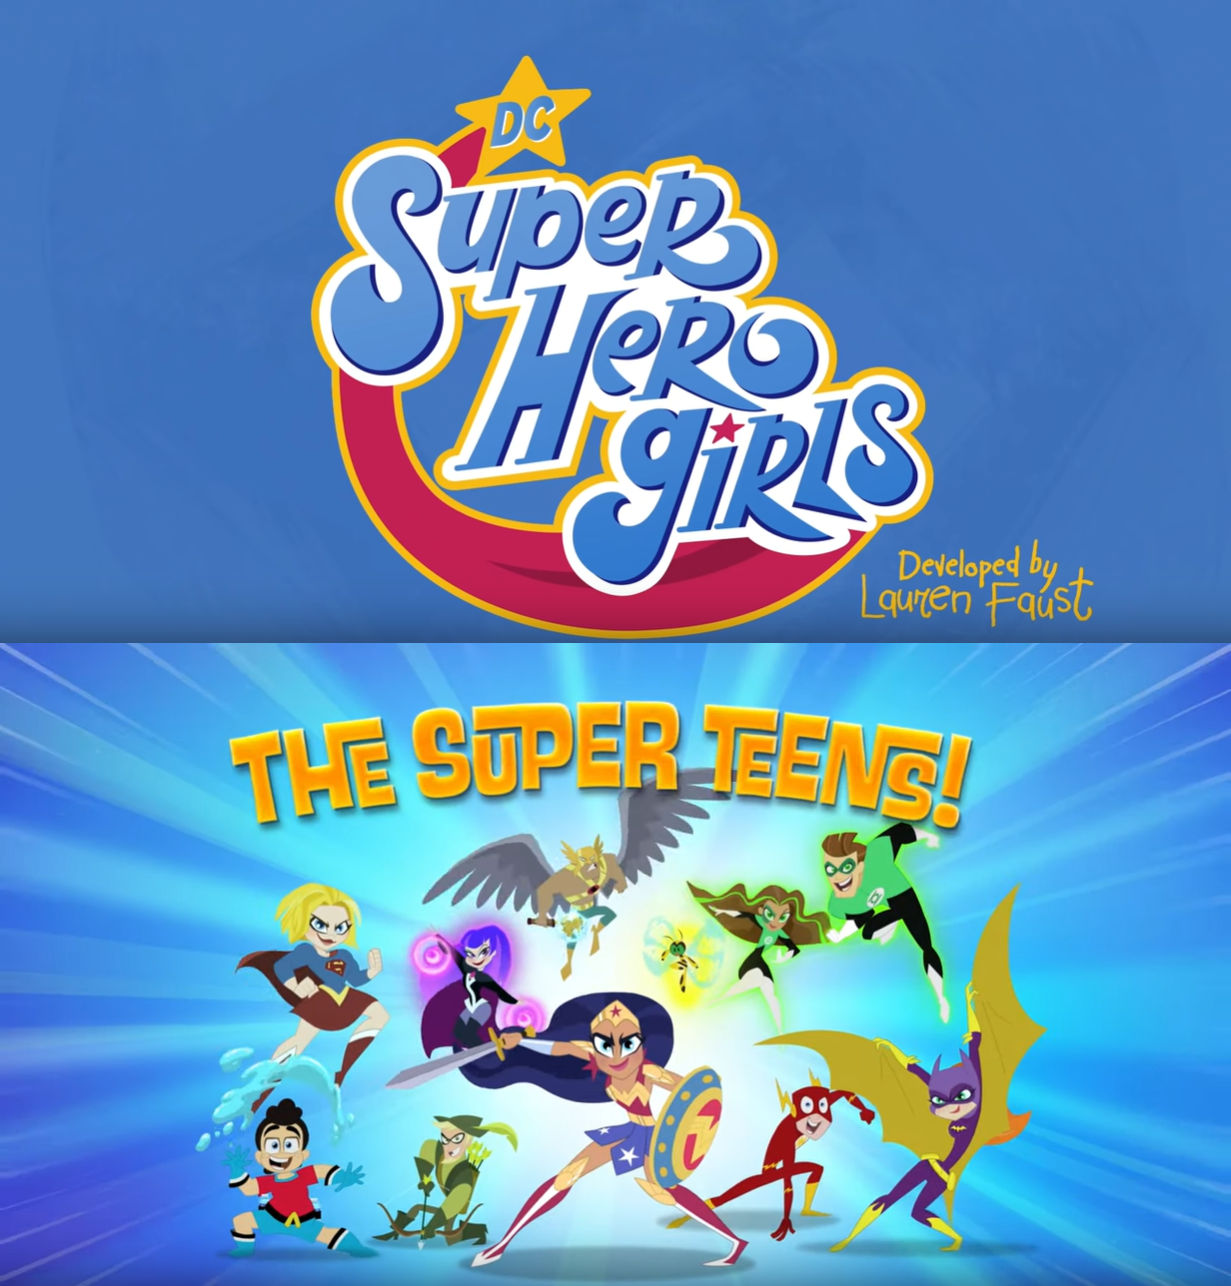 DC Super Hero Girls - The Super Teens! by jake555555555 on DeviantArt